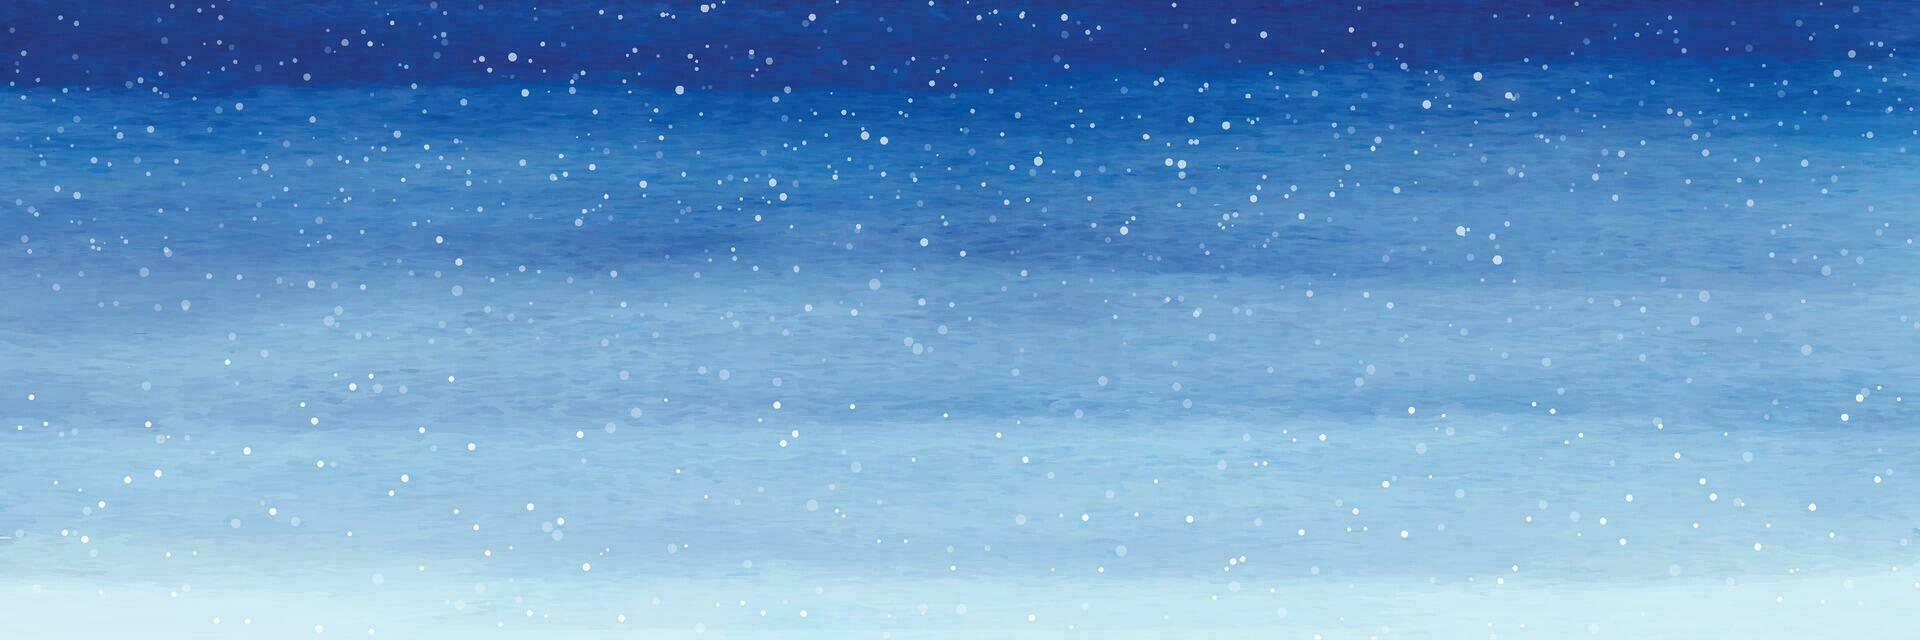 Navidad antecedentes con nieve que cae creativo con azul acuarela vector